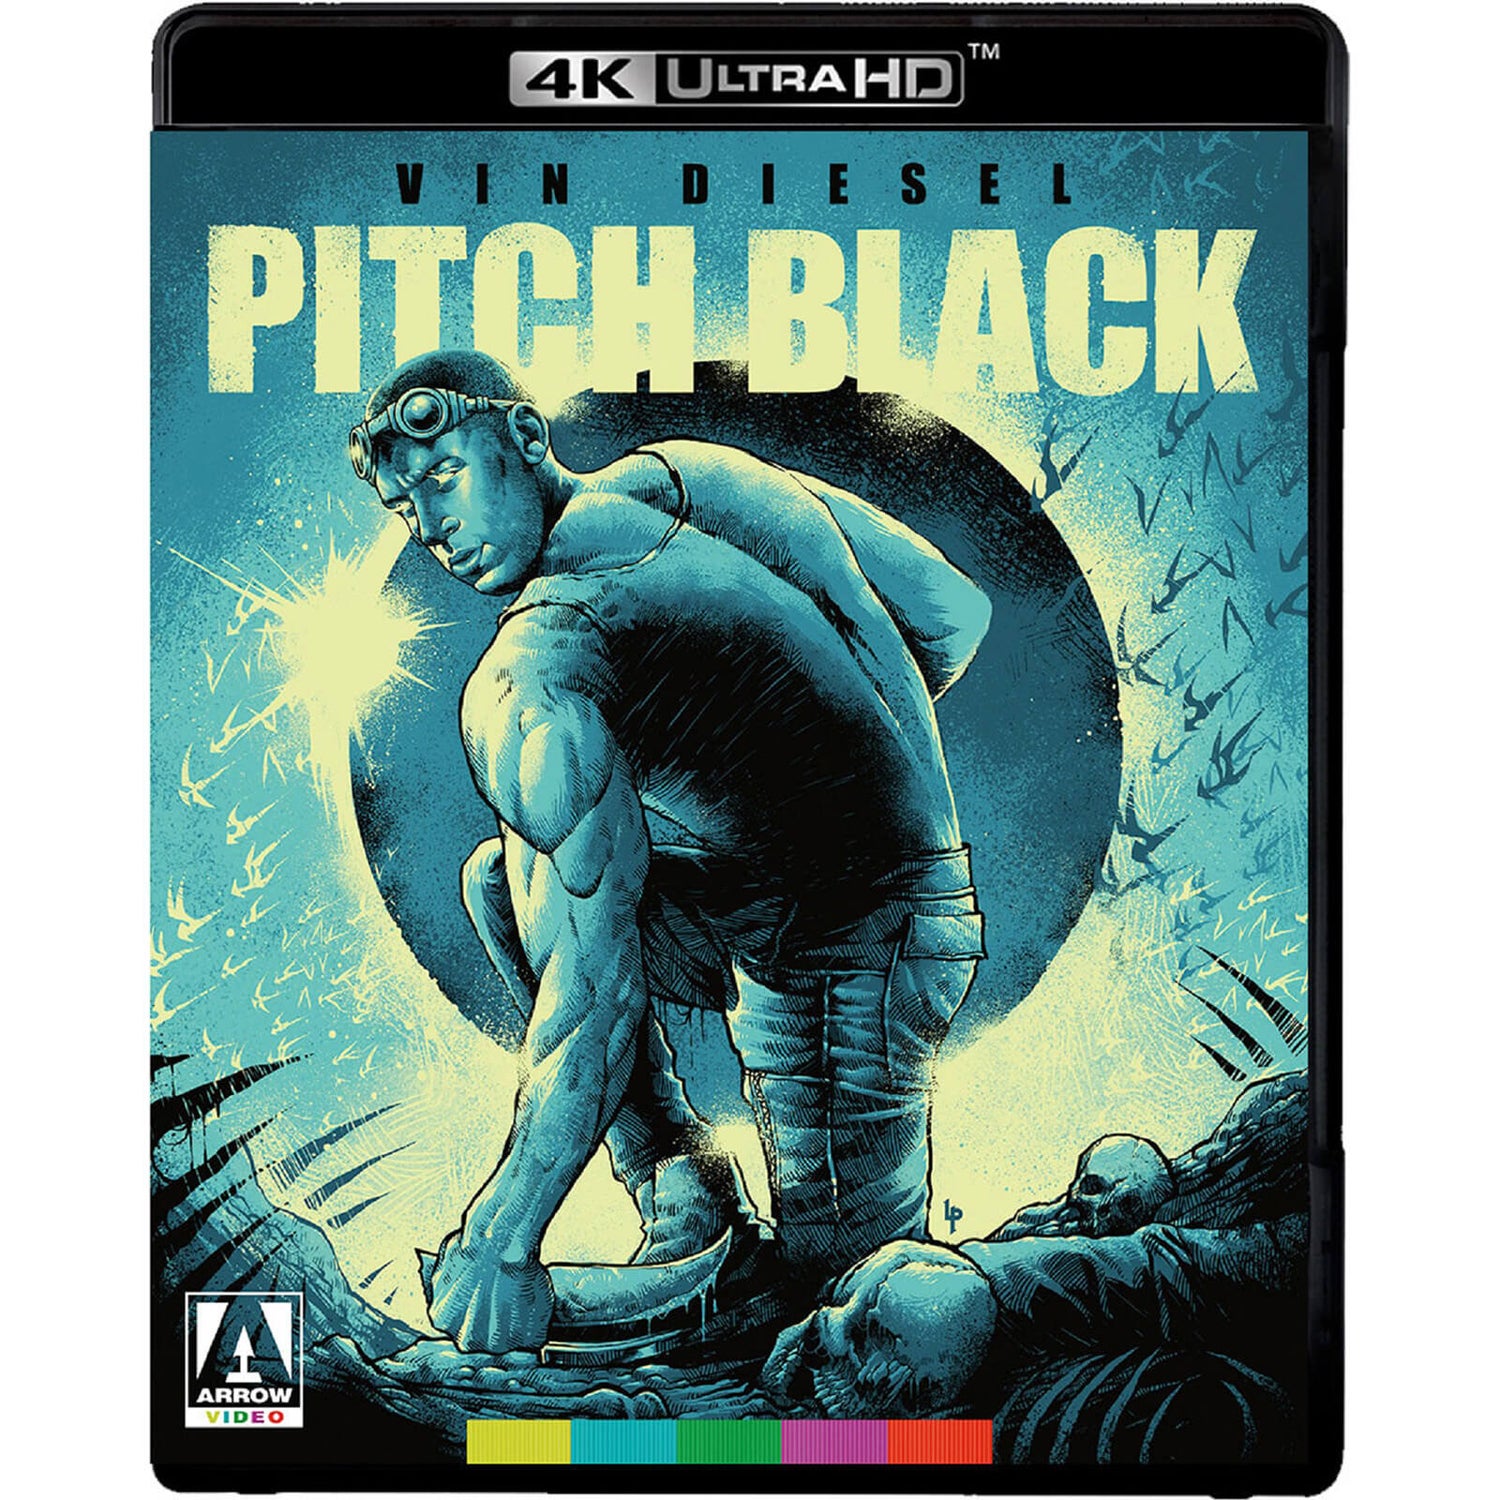 Pitch Black - 4K Ultra HD